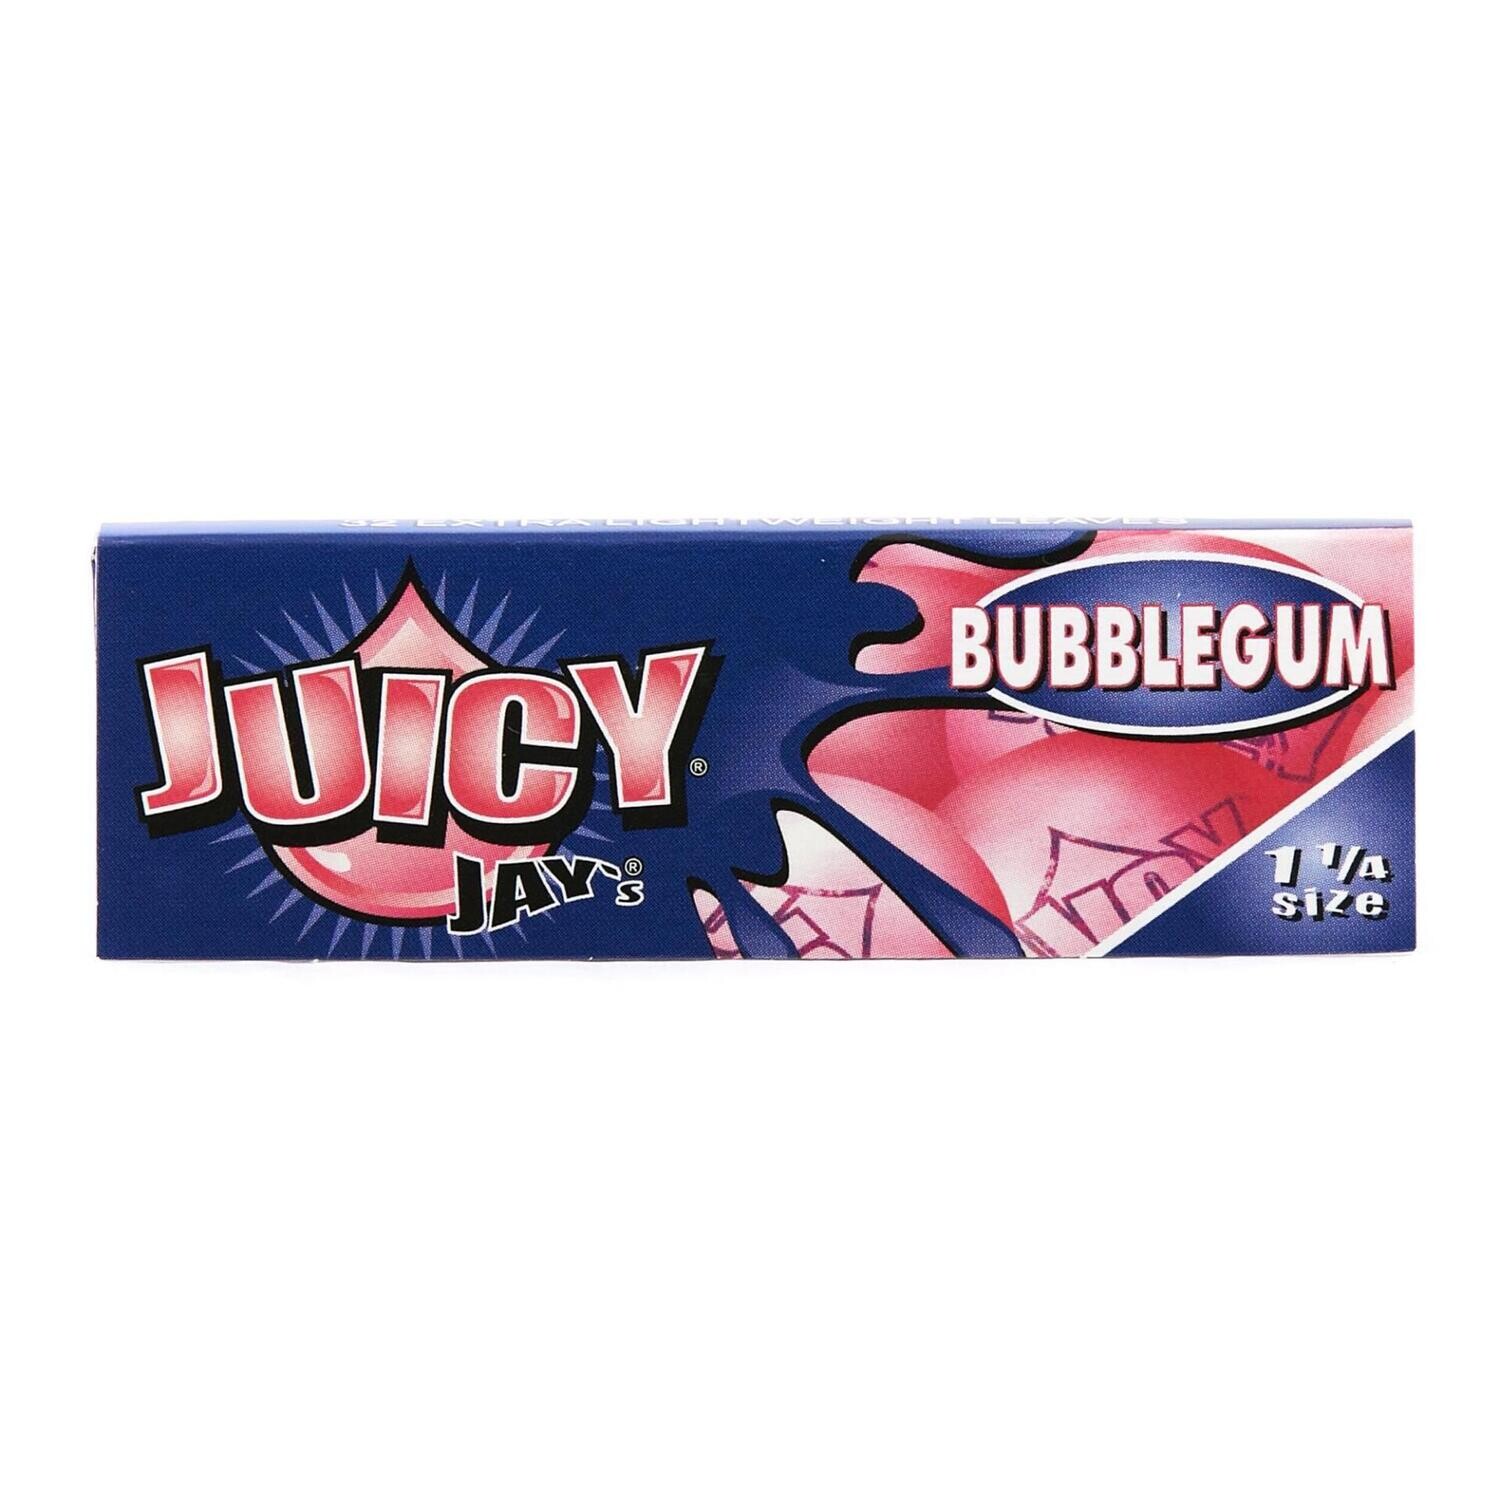 Juicy Jay's 1/4 BubbleGum